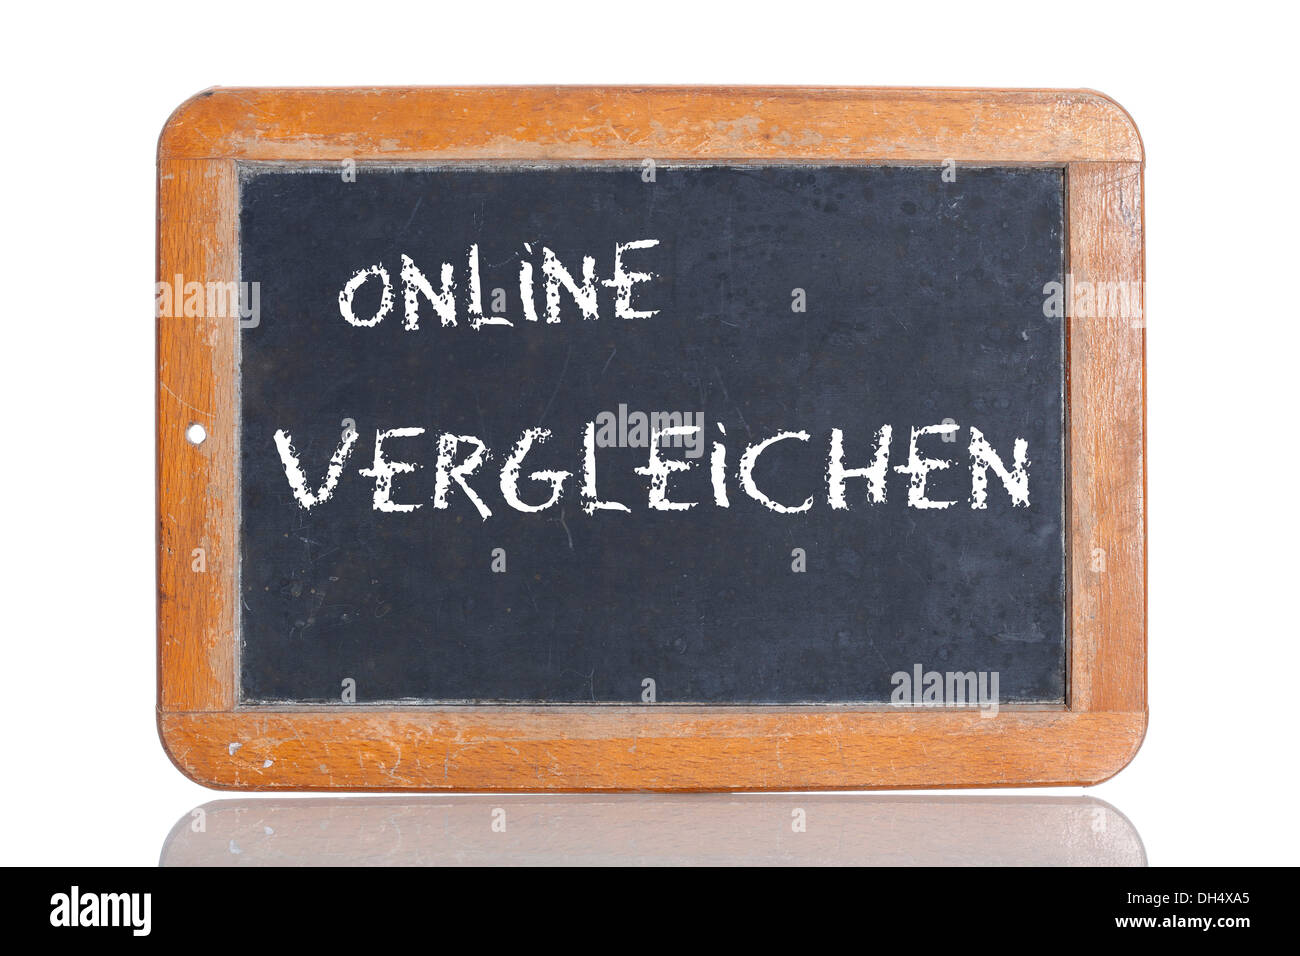 Old chalkboard, lettering 'ONLINE VERGLEICHEN', German for 'COMPARE ONLINE' Stock Photo